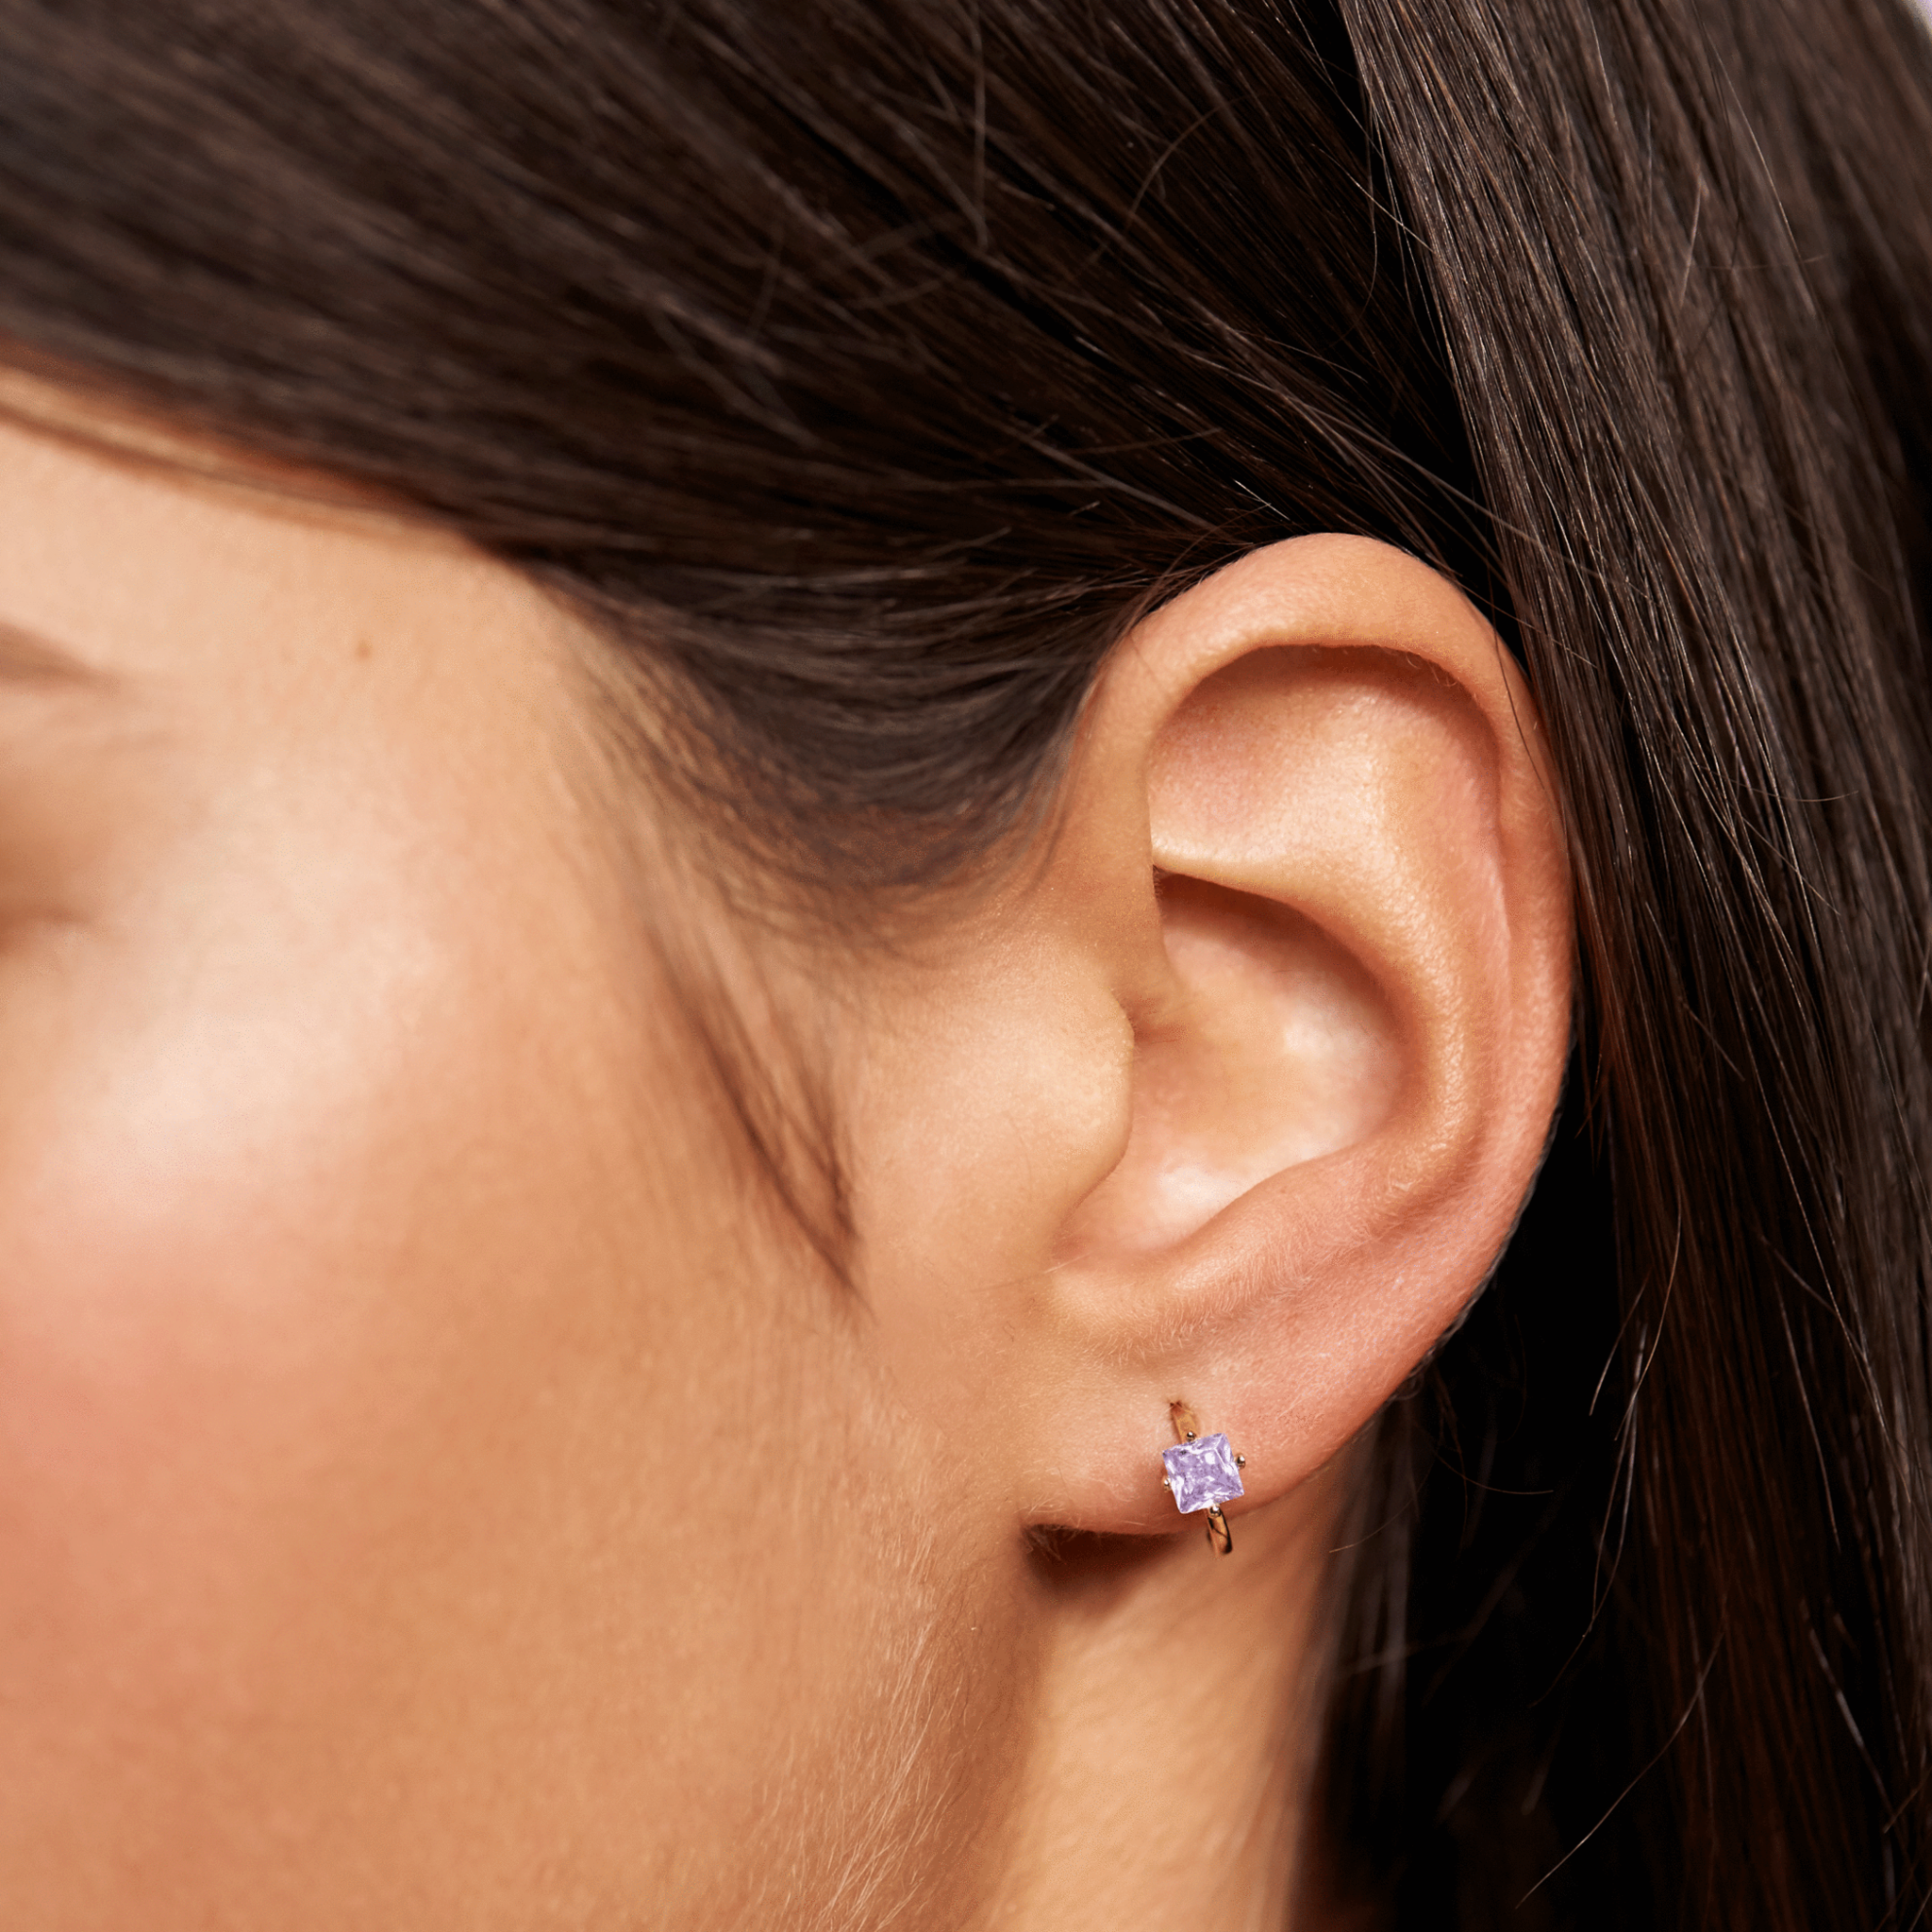 Lavender Lis Earrings